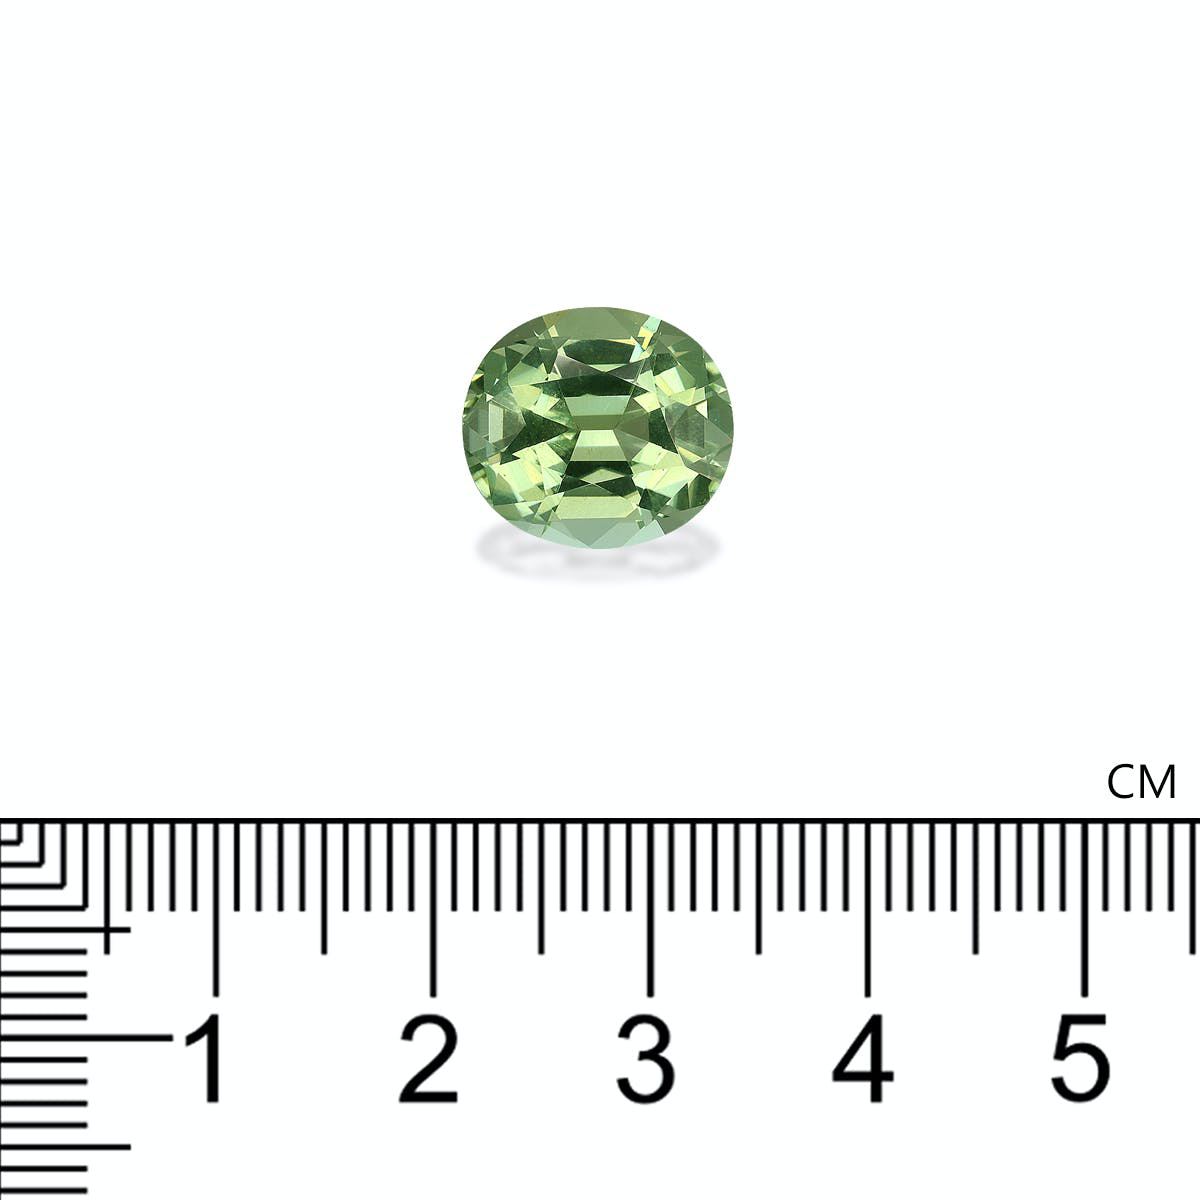 Picture of Seafoam Green Tourmaline 5.64ct (TG1371)